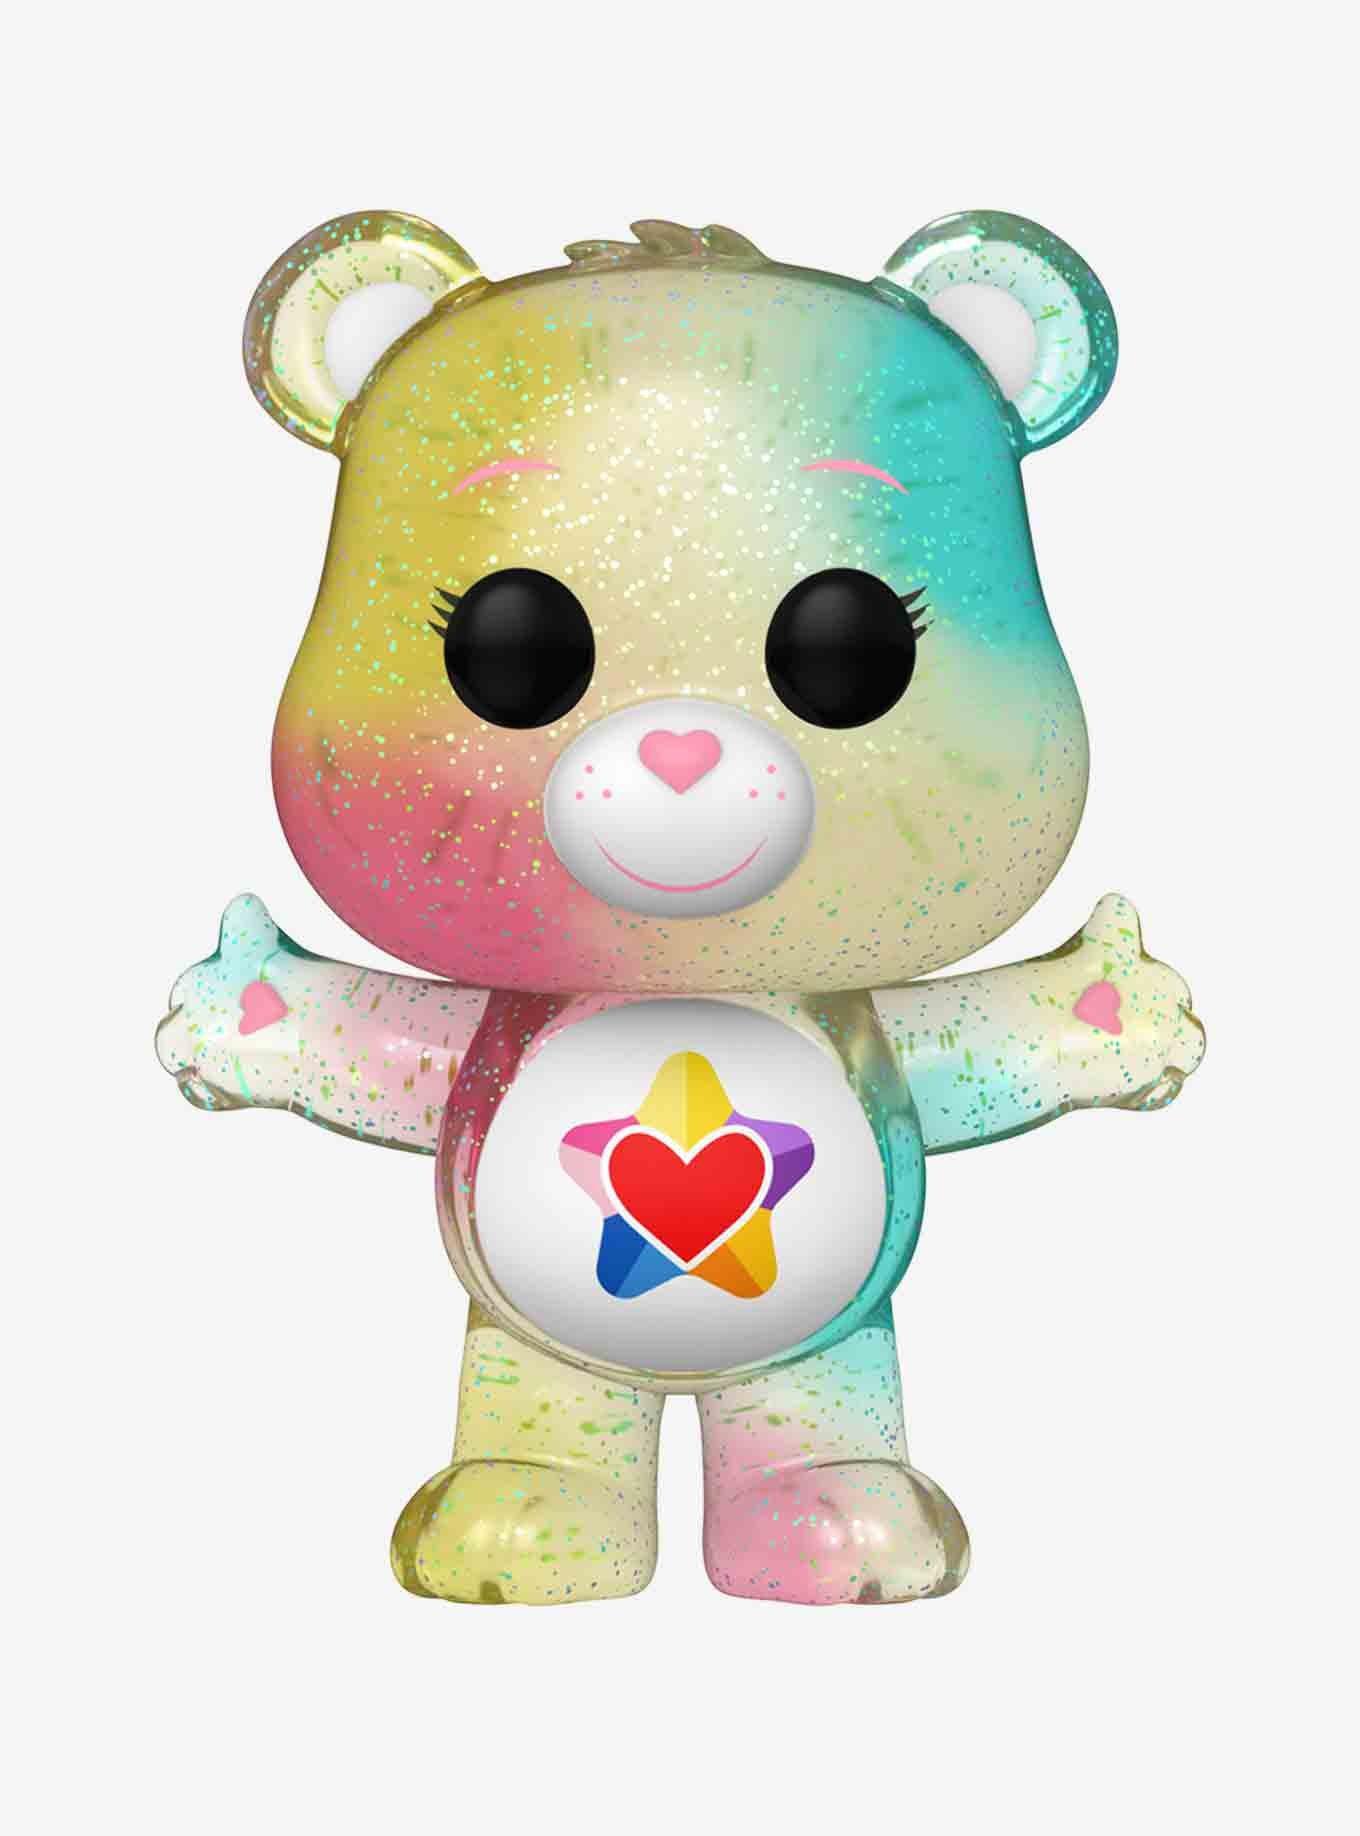 Funko Care Bears 40th Pop! Animation True Heart Bear Vinyl Figure, , alternate